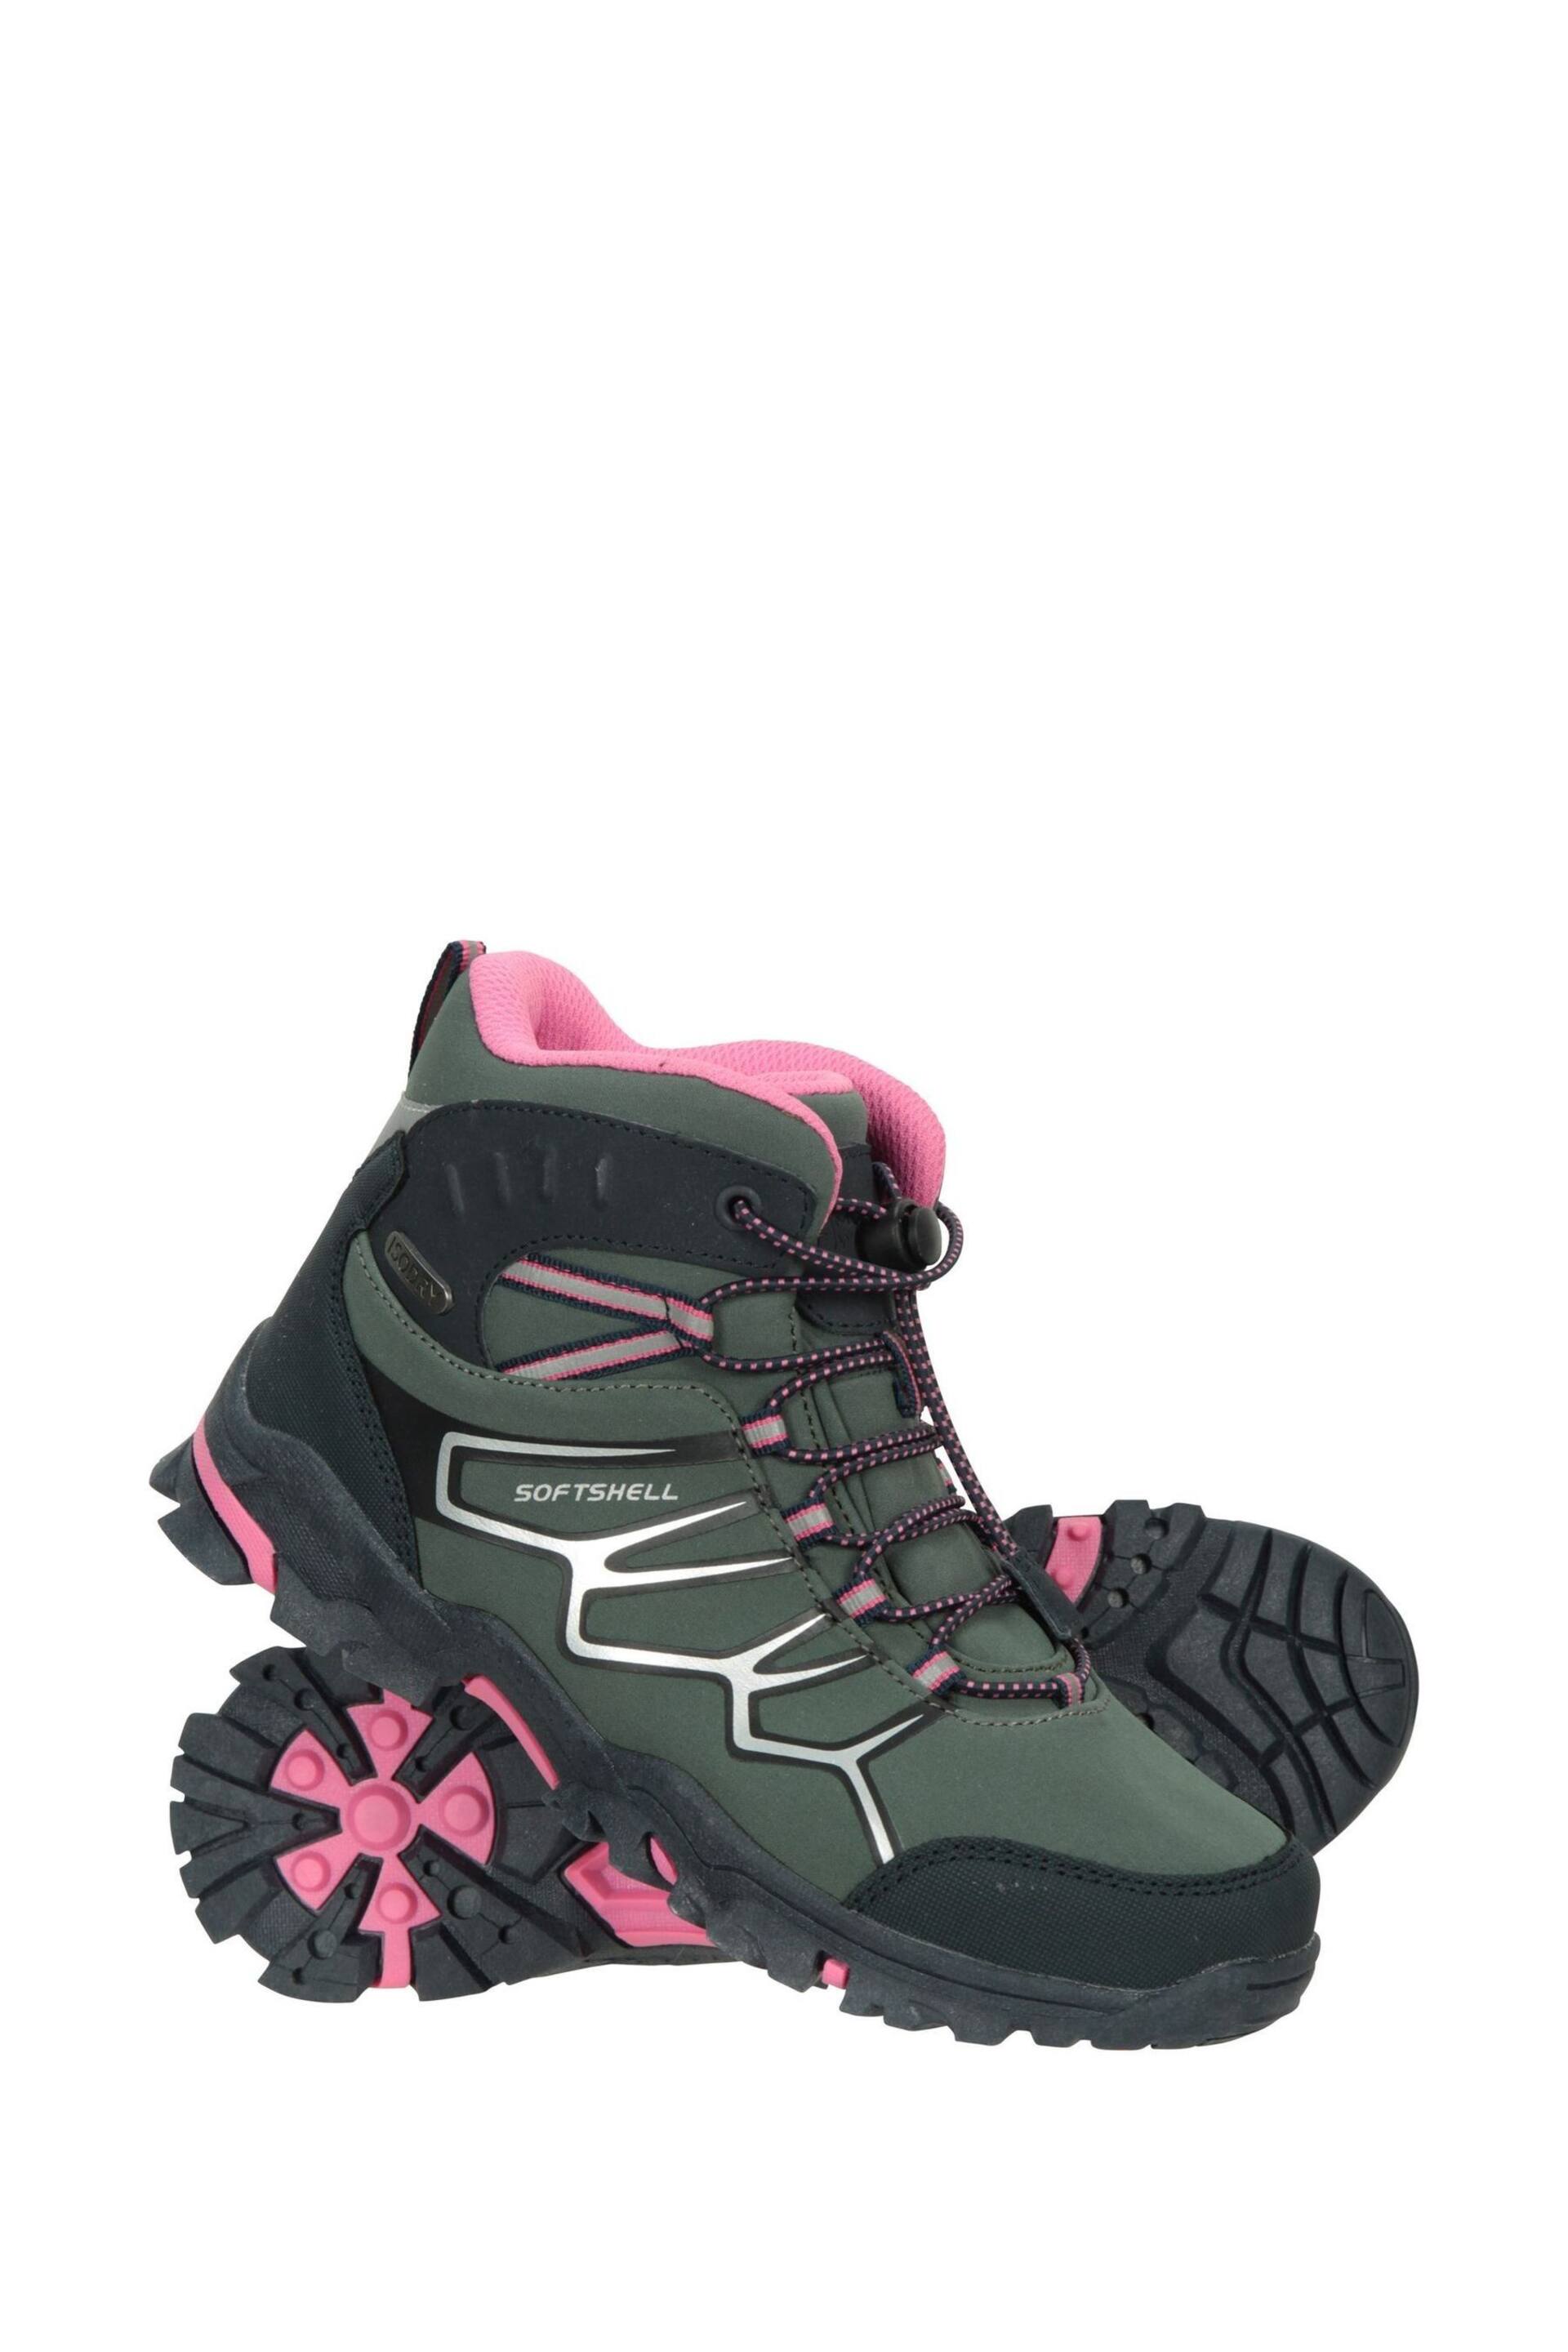 Mountain Warehouse Green Kids Softshell Walking Boots - Image 1 of 5